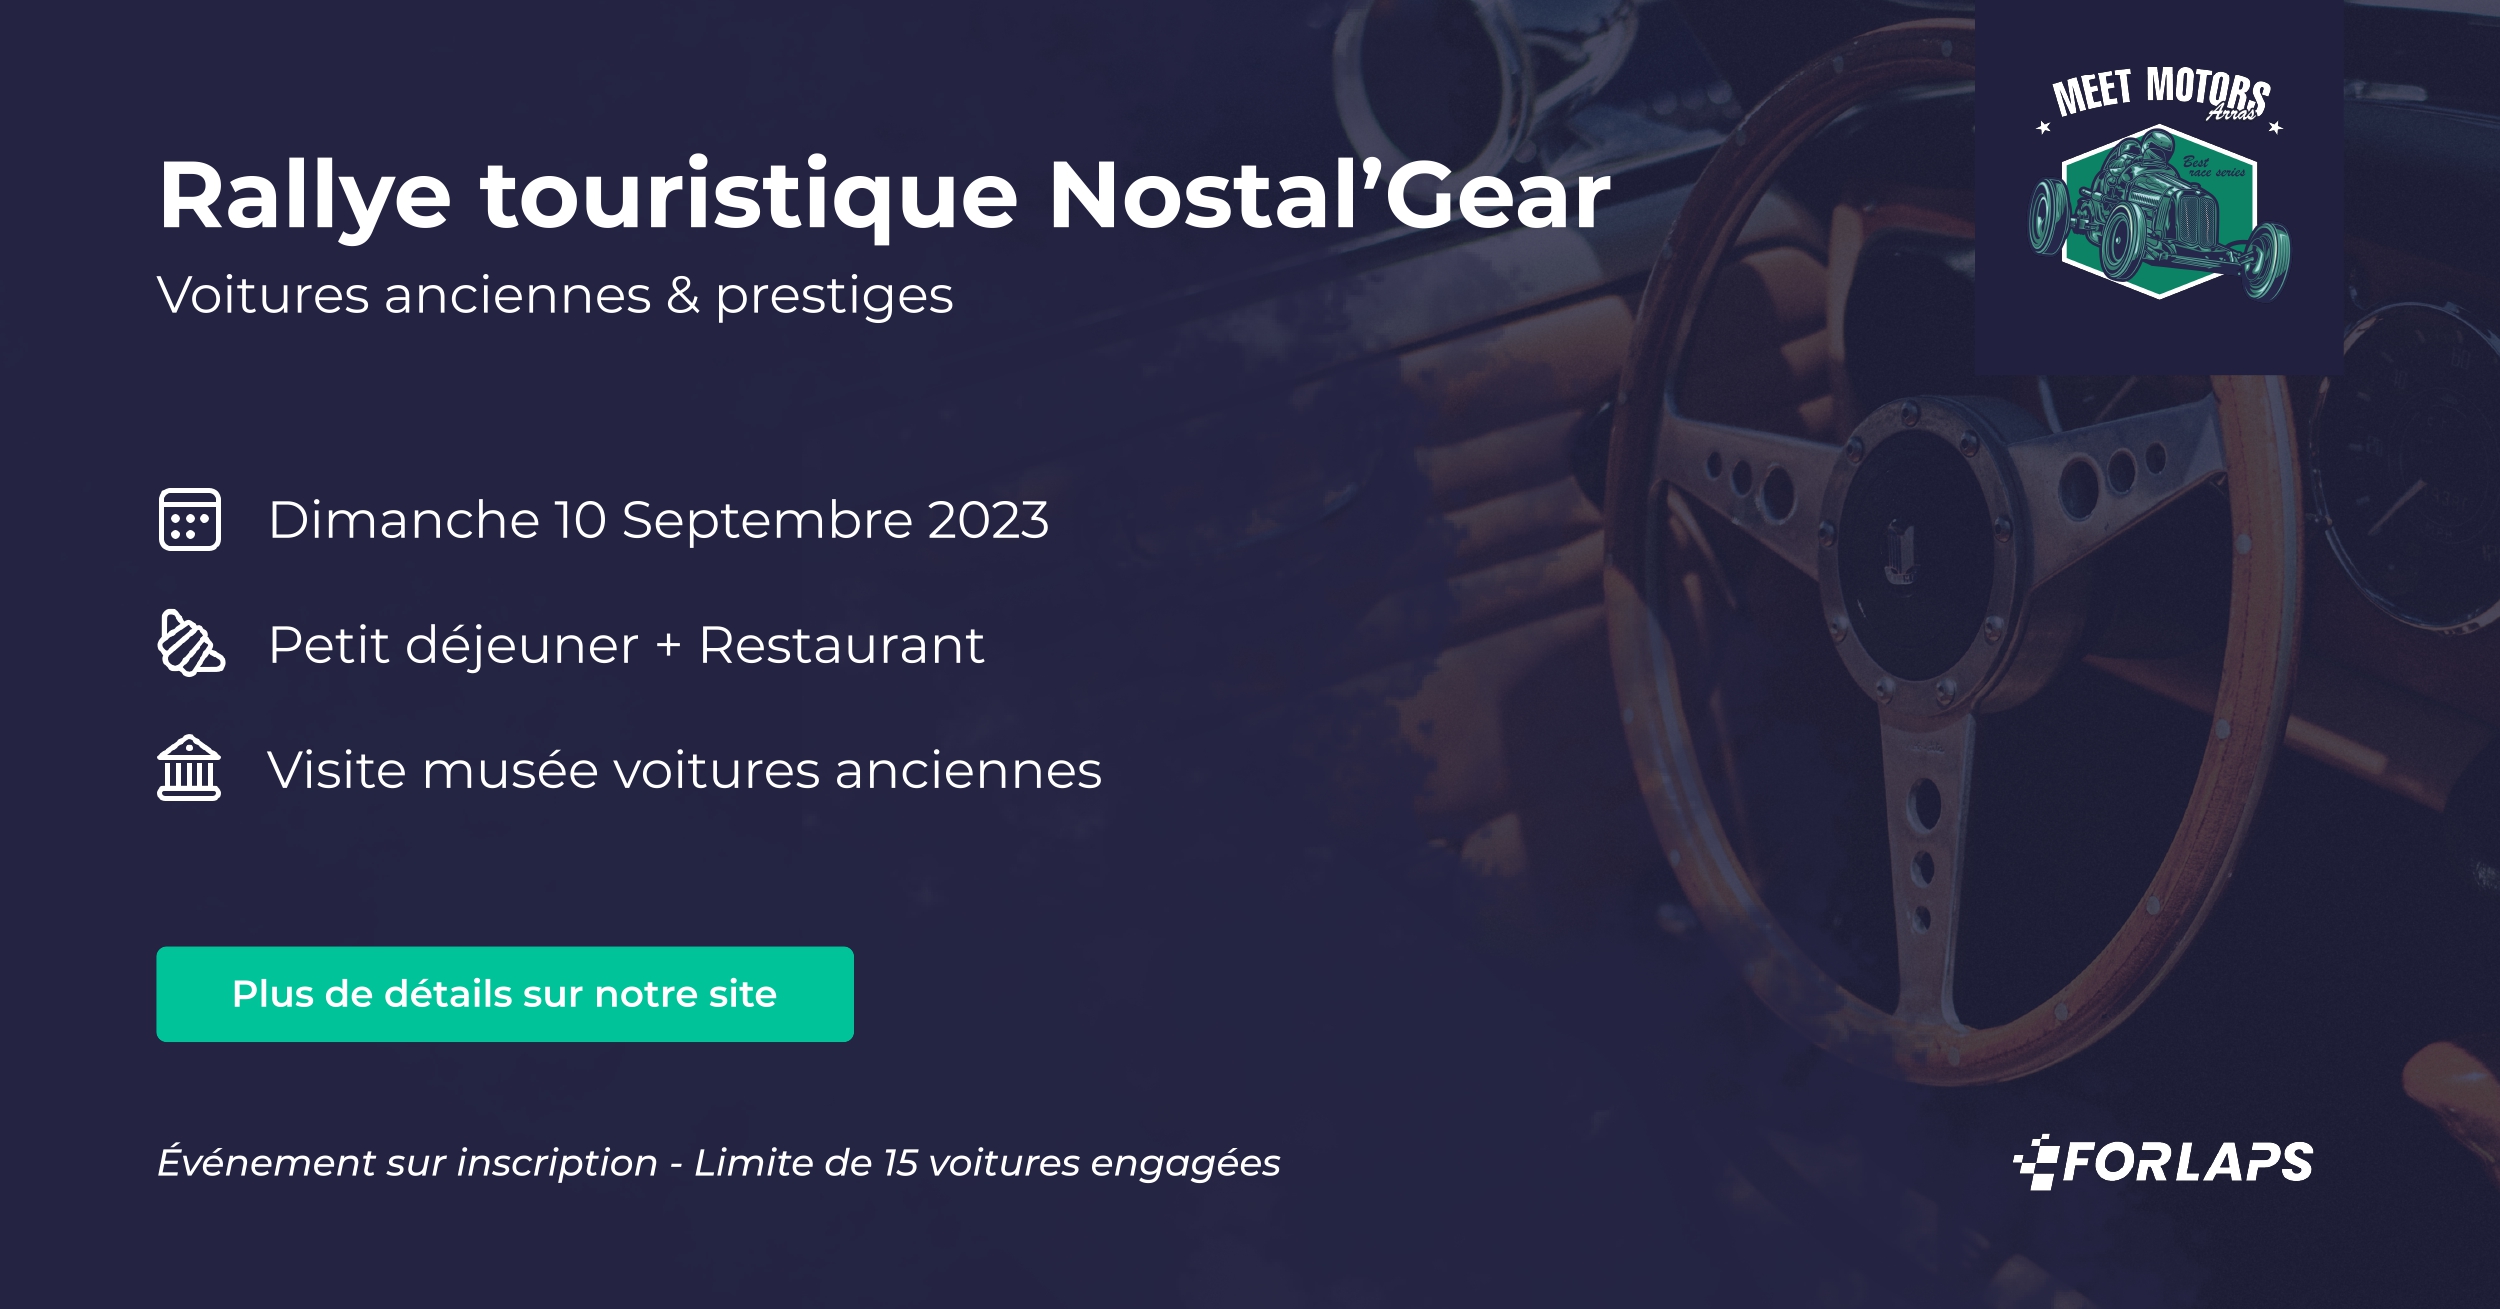 Rallye touristique Nostal’Gear